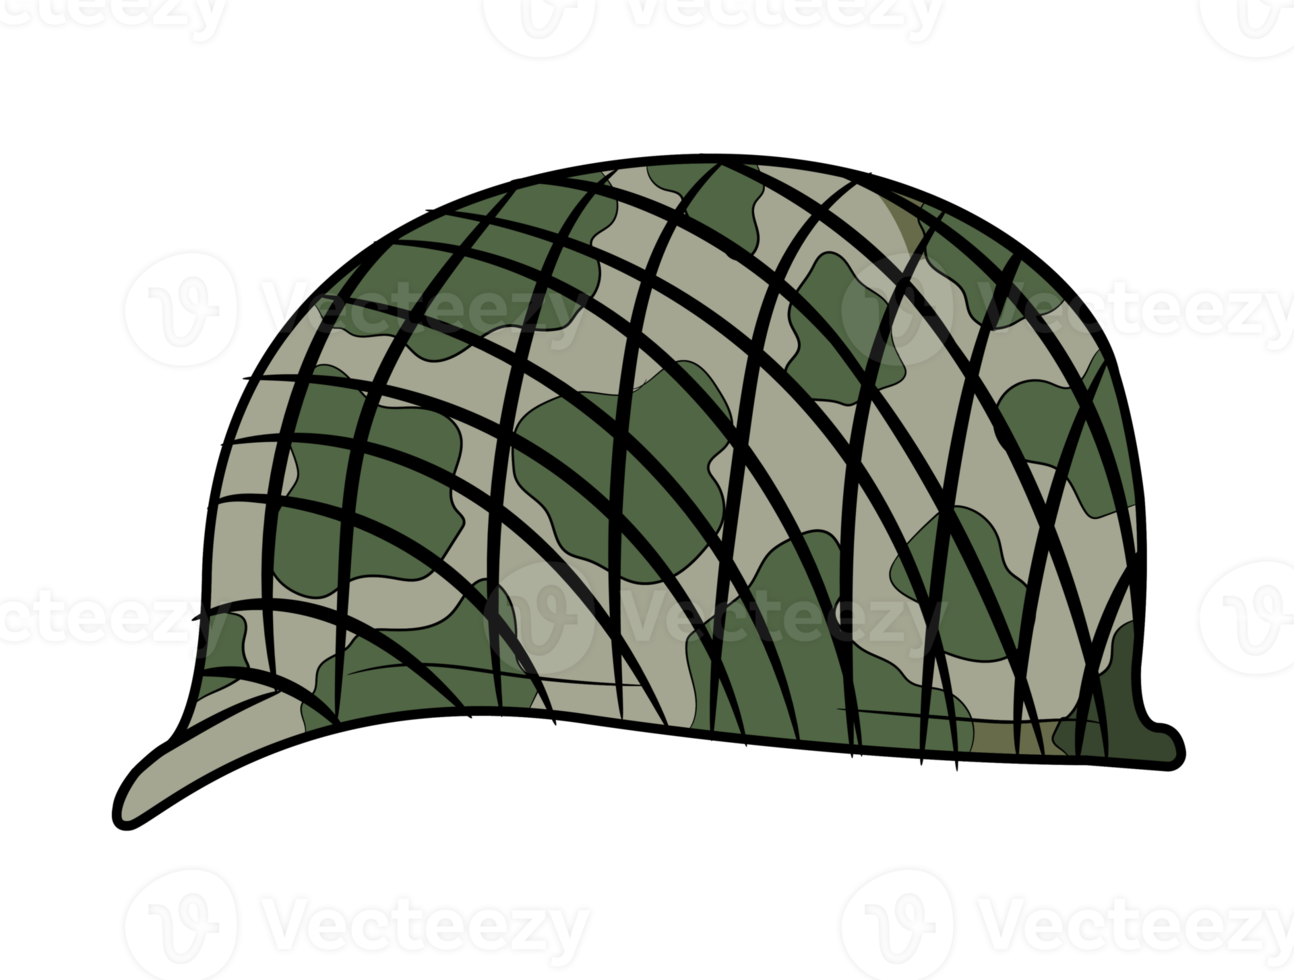 casco militar camo uniforme del ejército gorra verde png